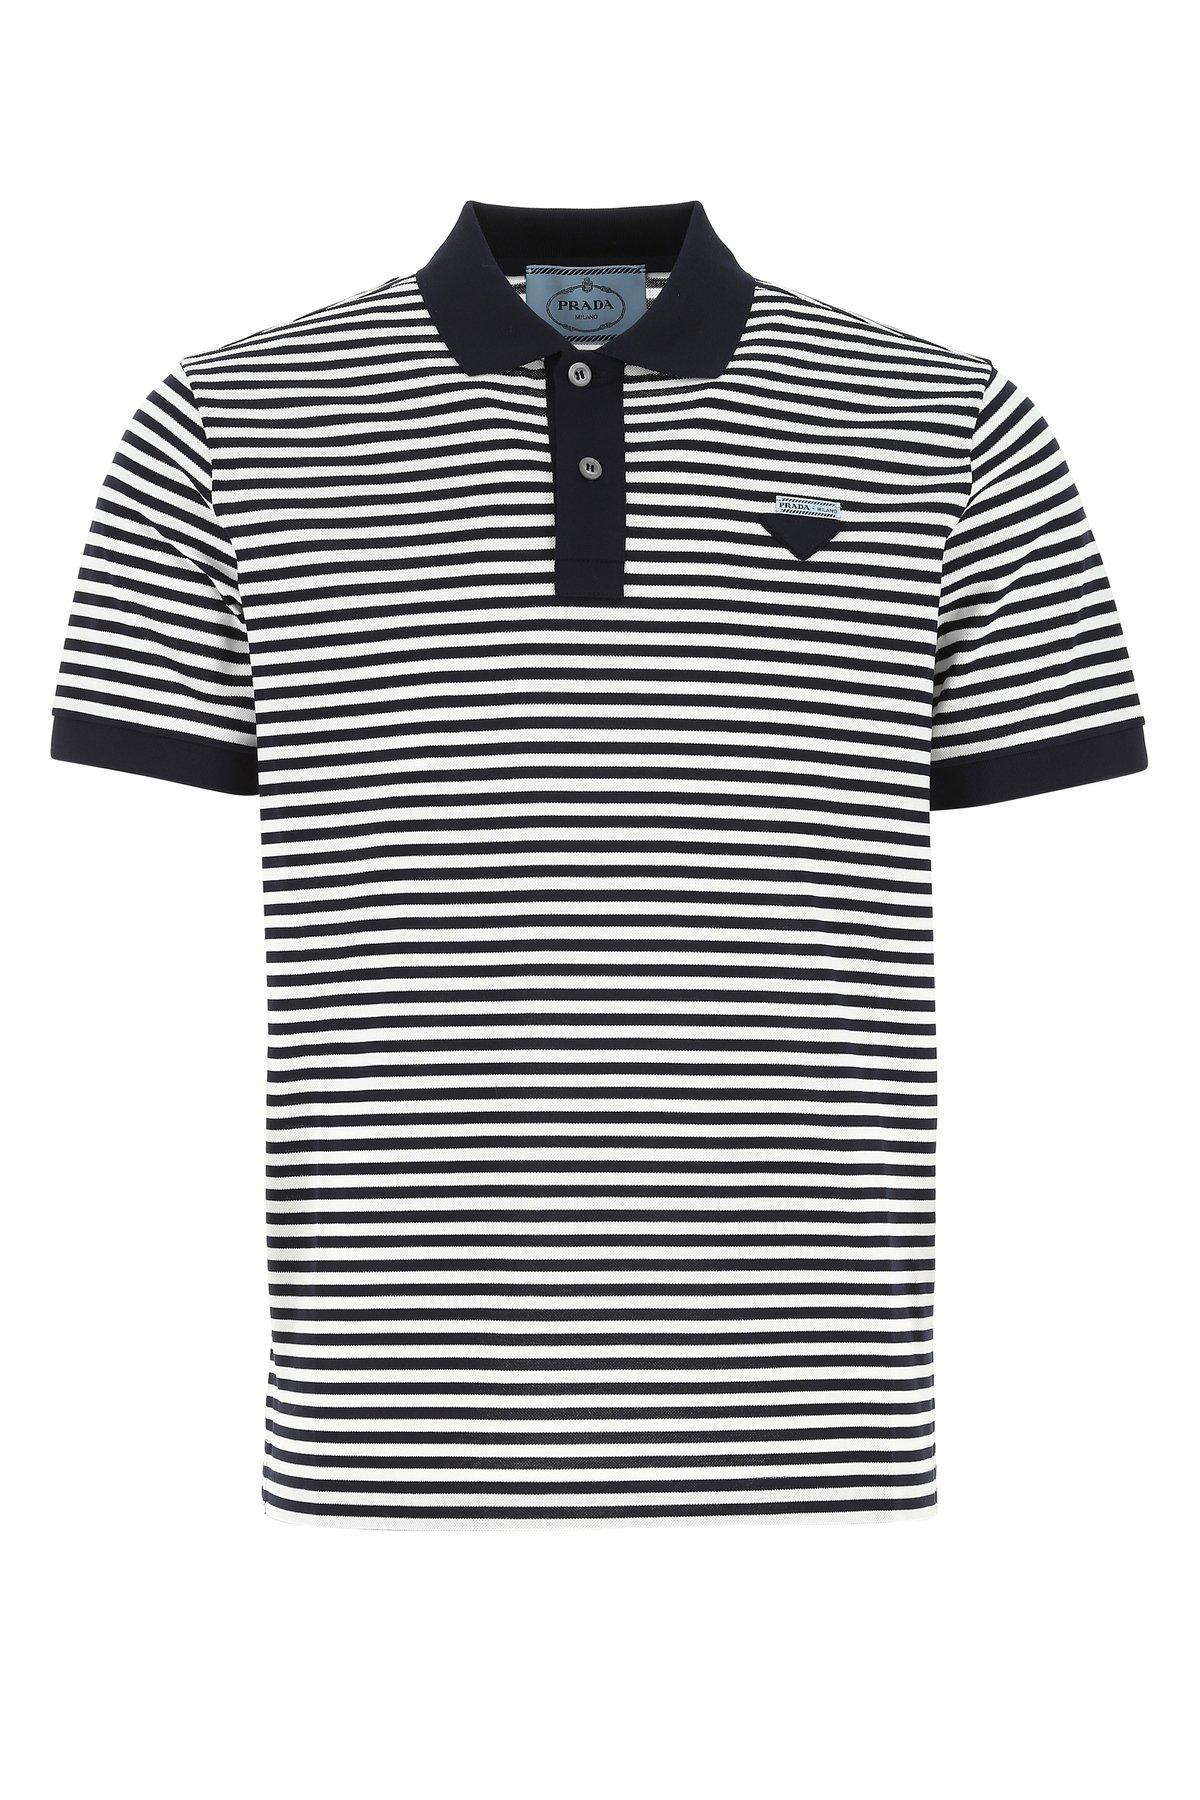 Prada Cotton Striped Polo Shirt in Blue for Men - Lyst